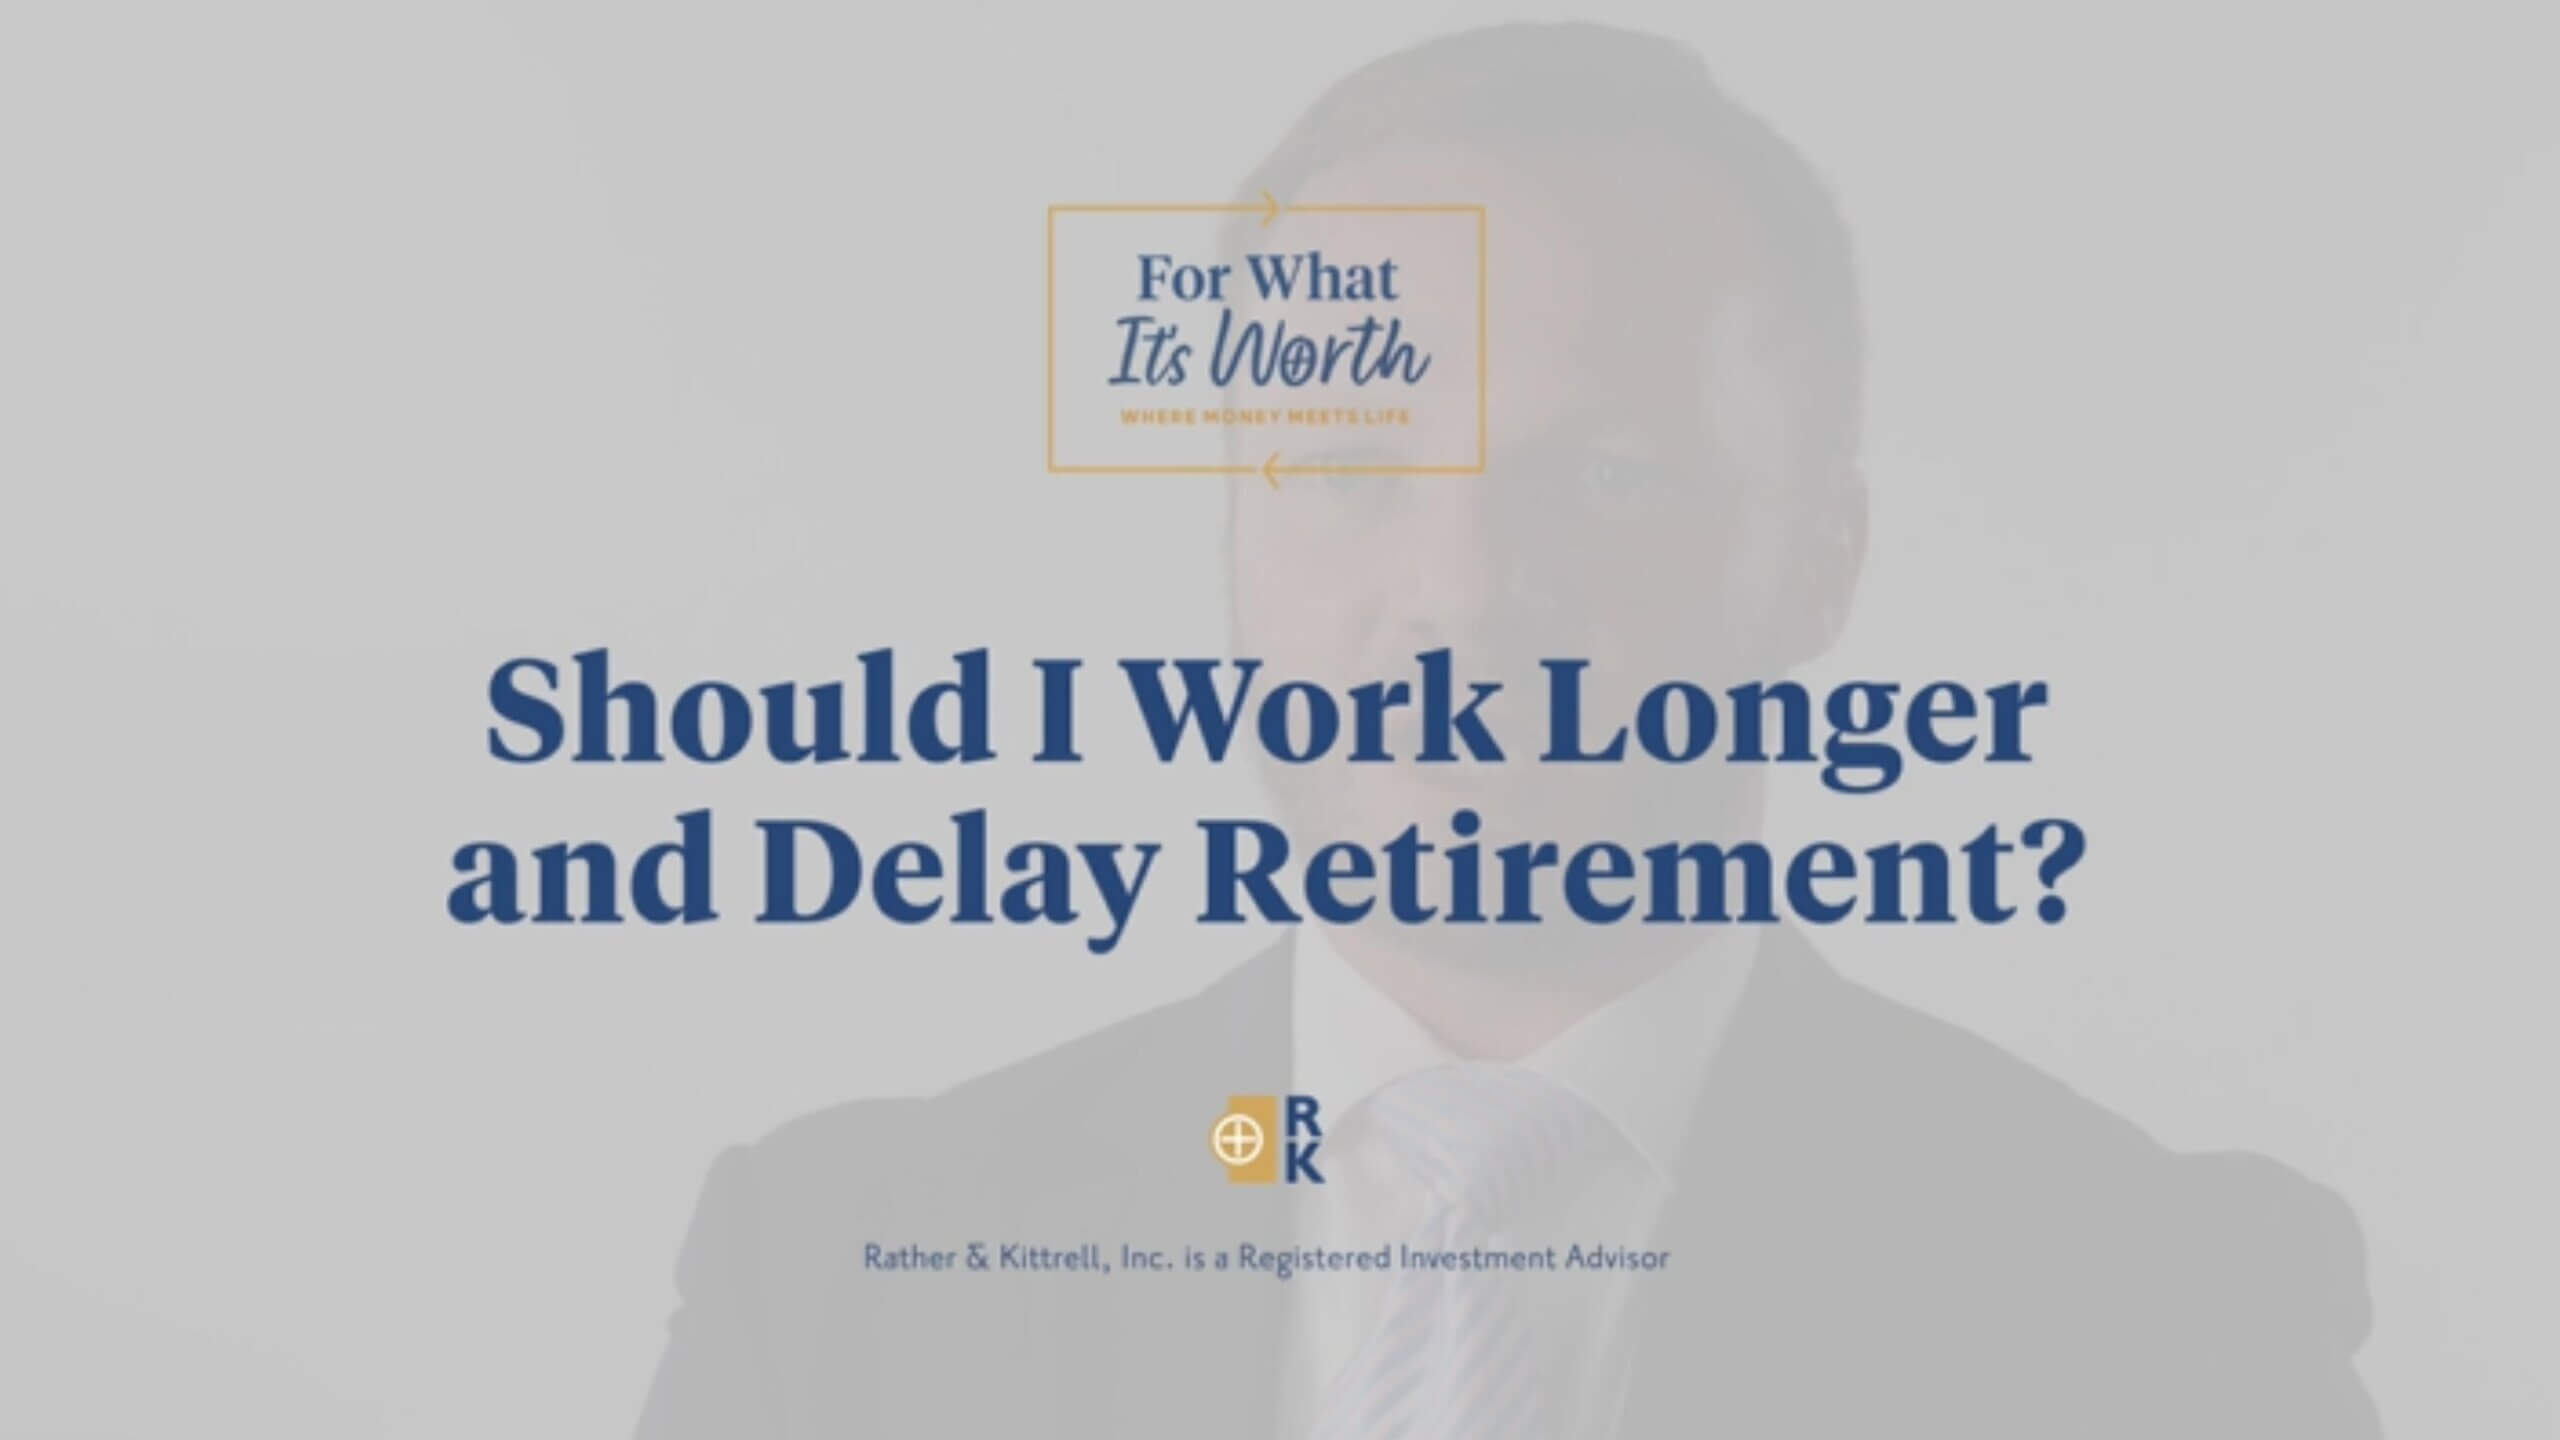 Should I work longer and delay retirement